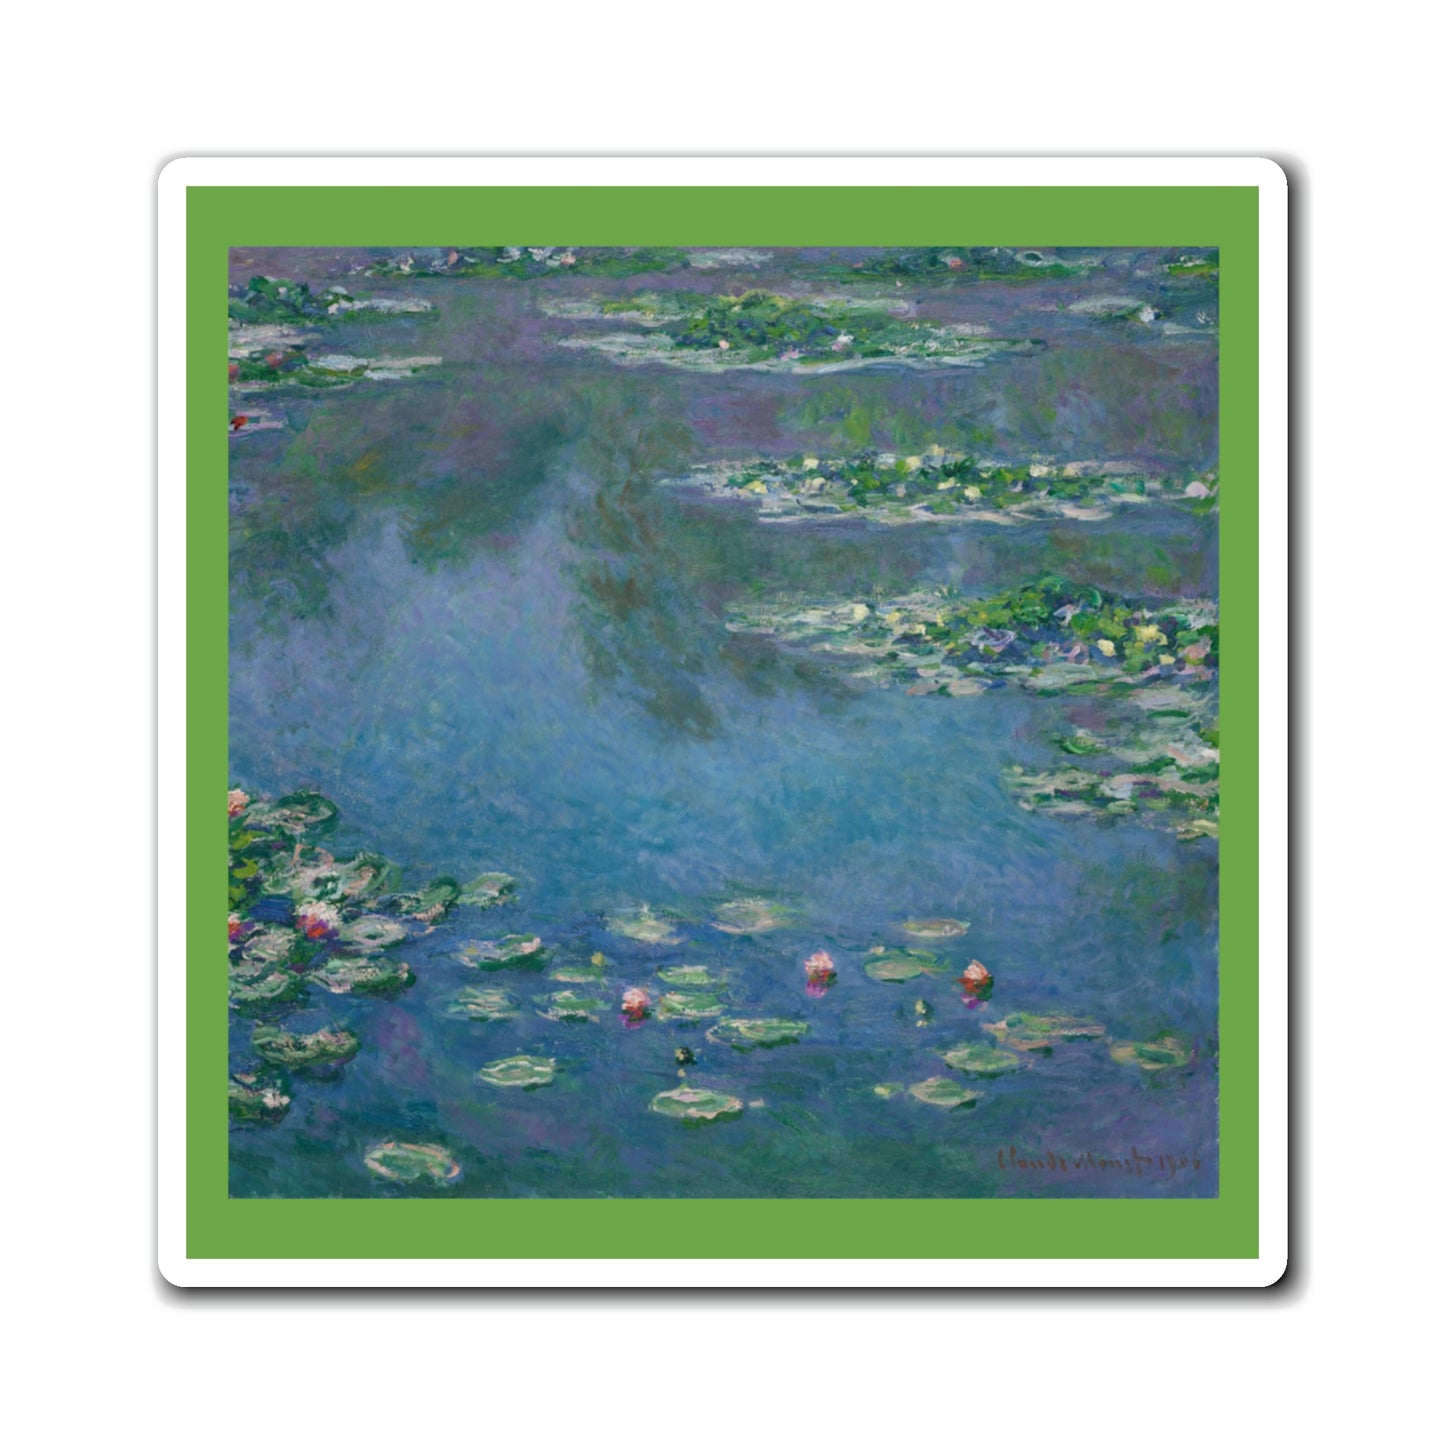 Water Lilies, Claude Monet - Magnets